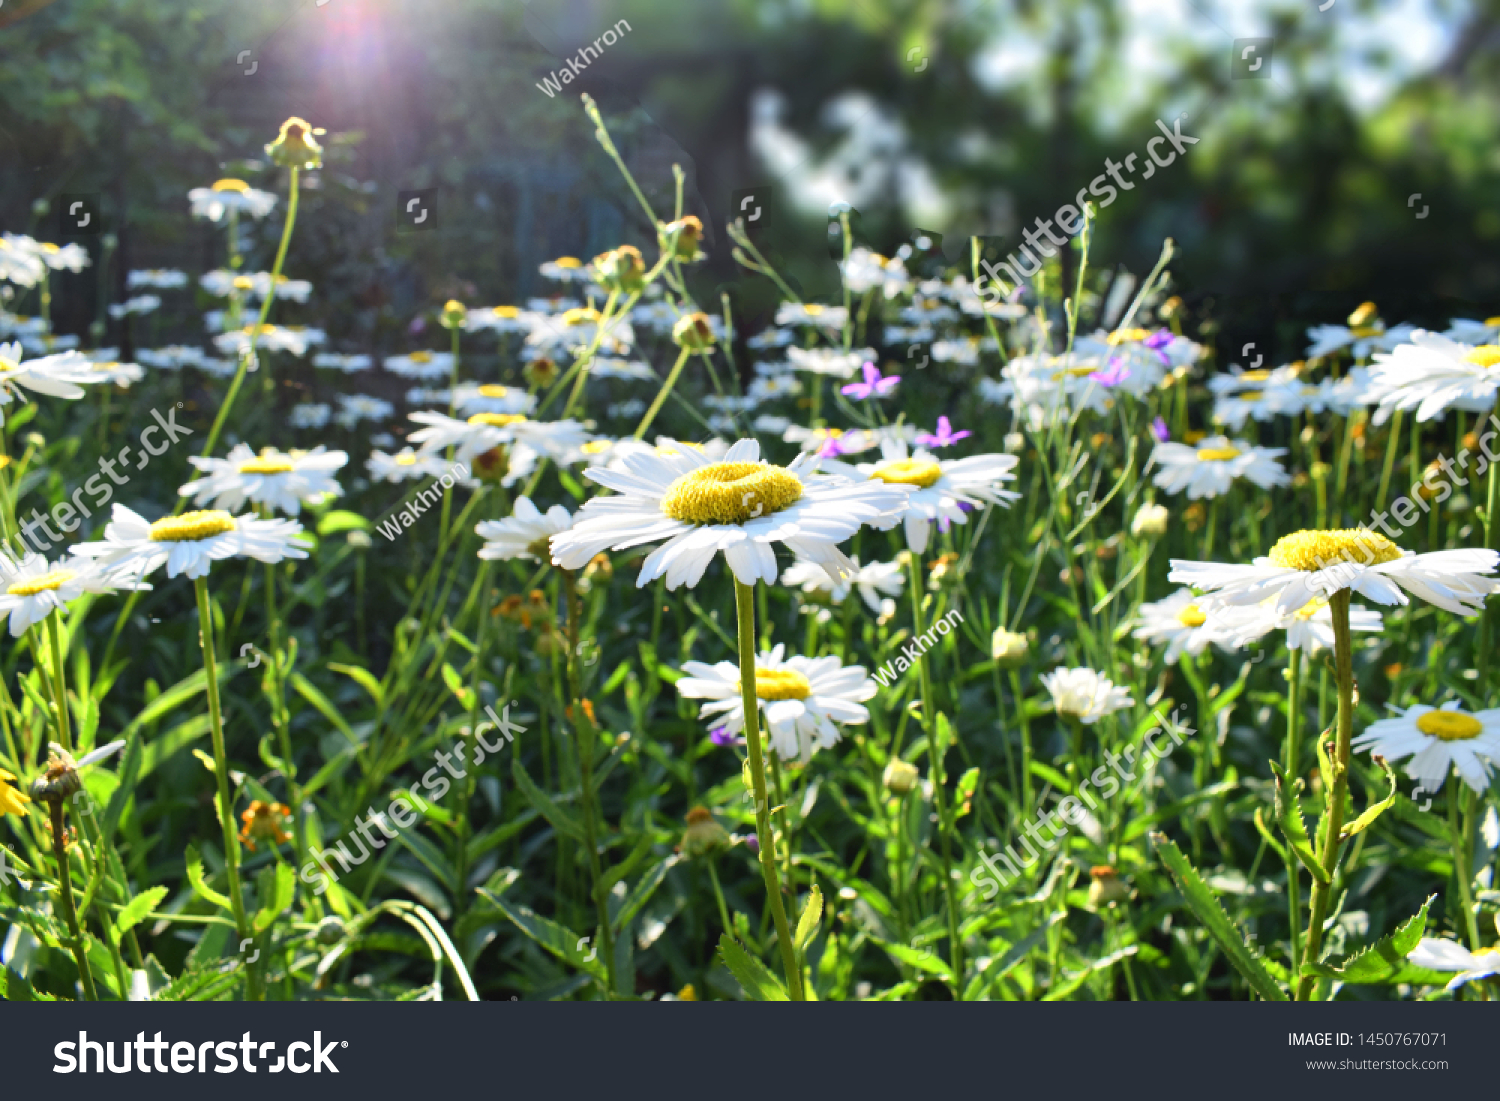 Flowering daisies in the garden.  Oxeye daisy, Leucanthemum vulgare, Daisies, Dox-eye, Common daisy, Dog daisy, Moon daisy #1450767071